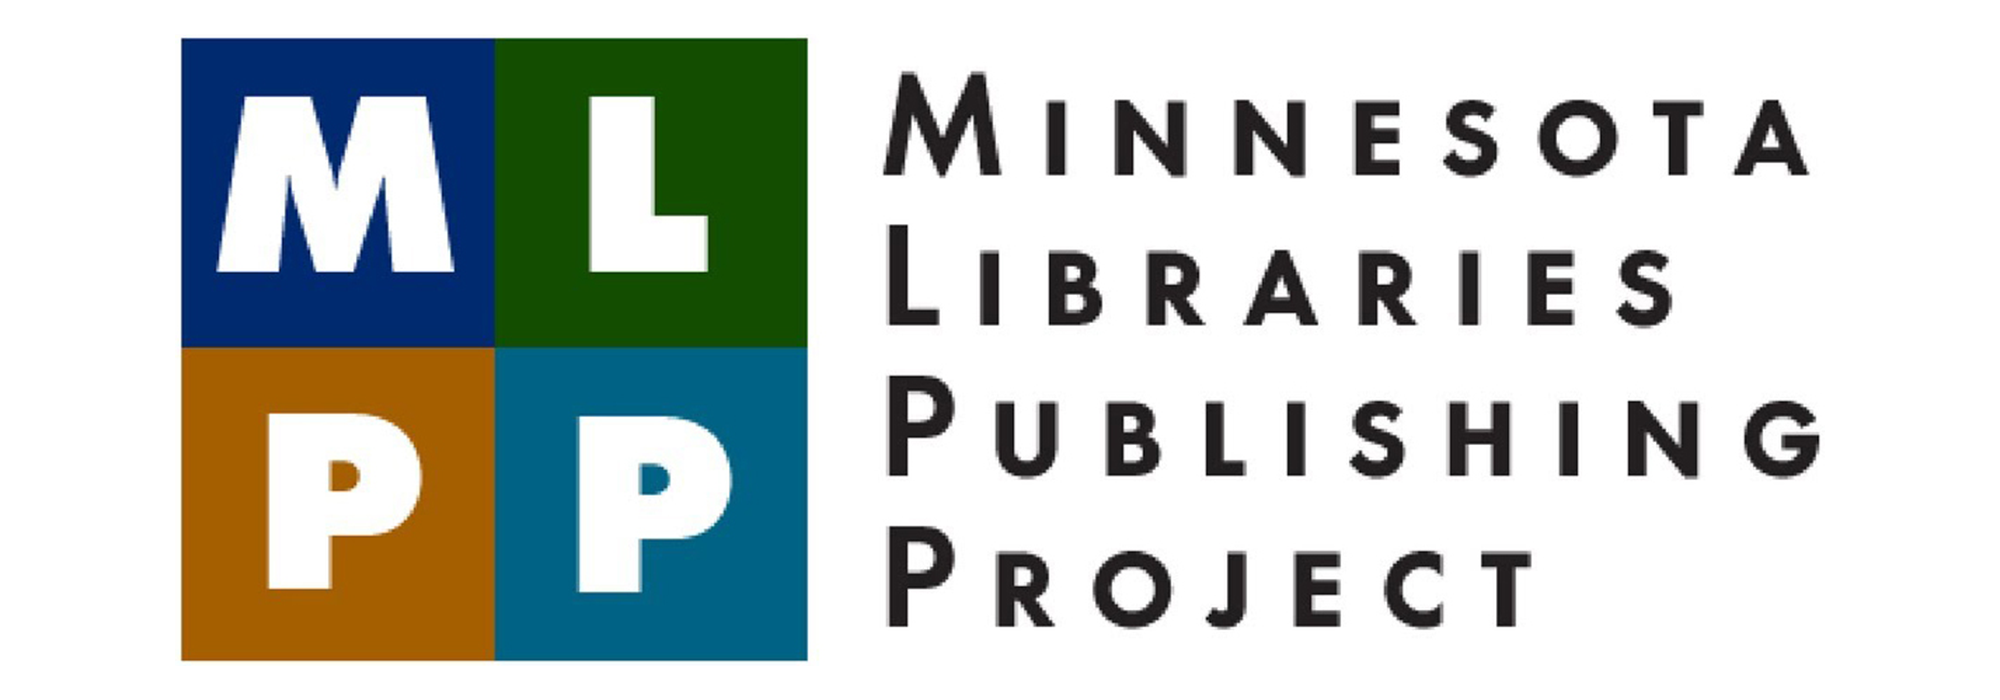 Minnesota Libraries Publishing Project logo.